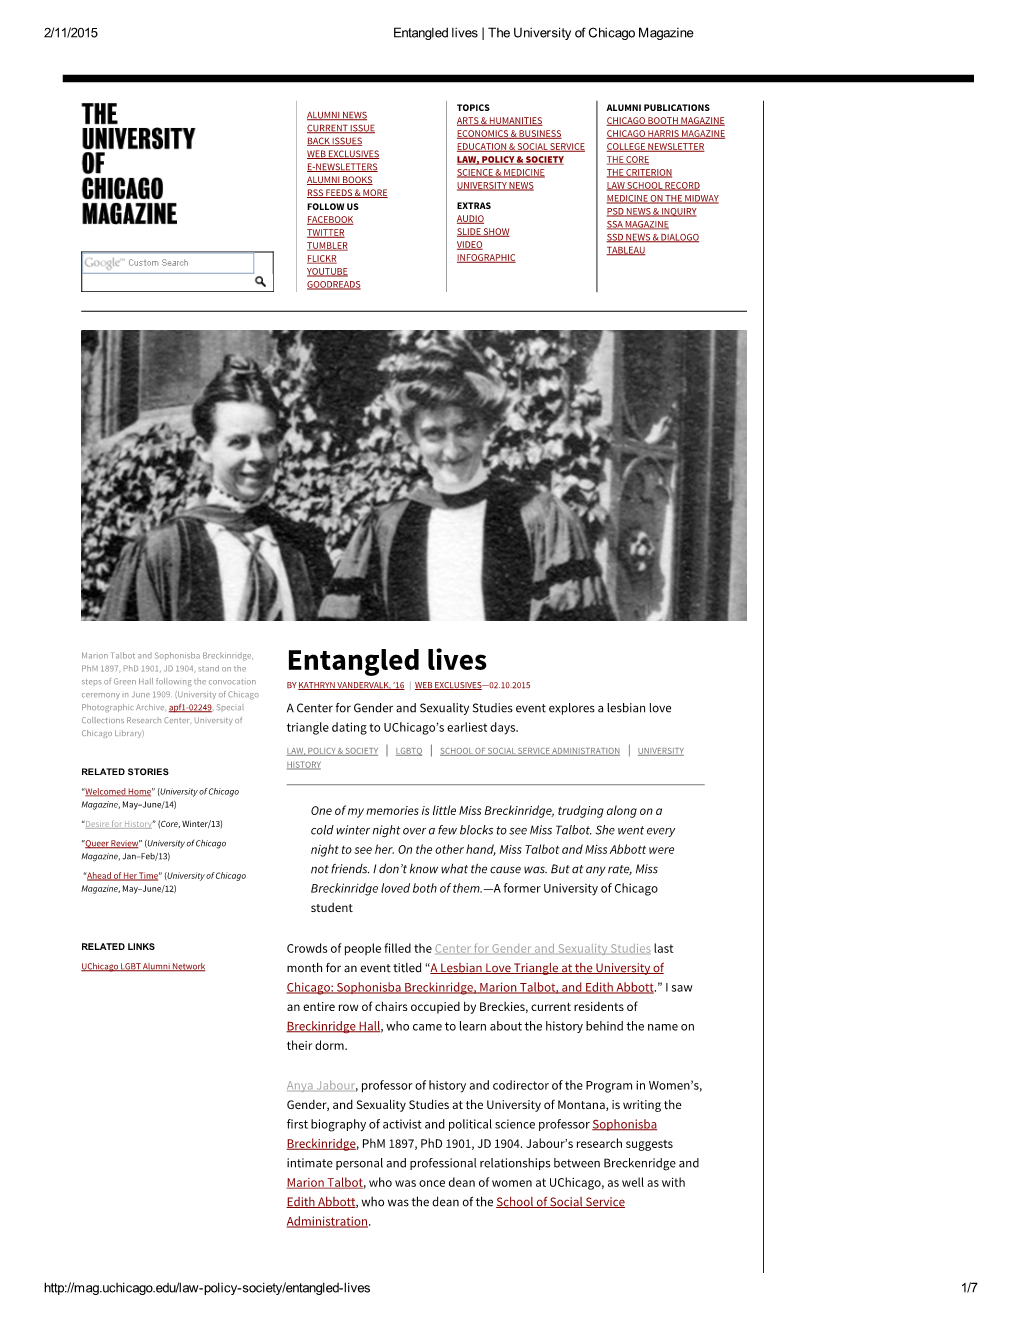 Entangled Lives | the University of Chicago Magazine